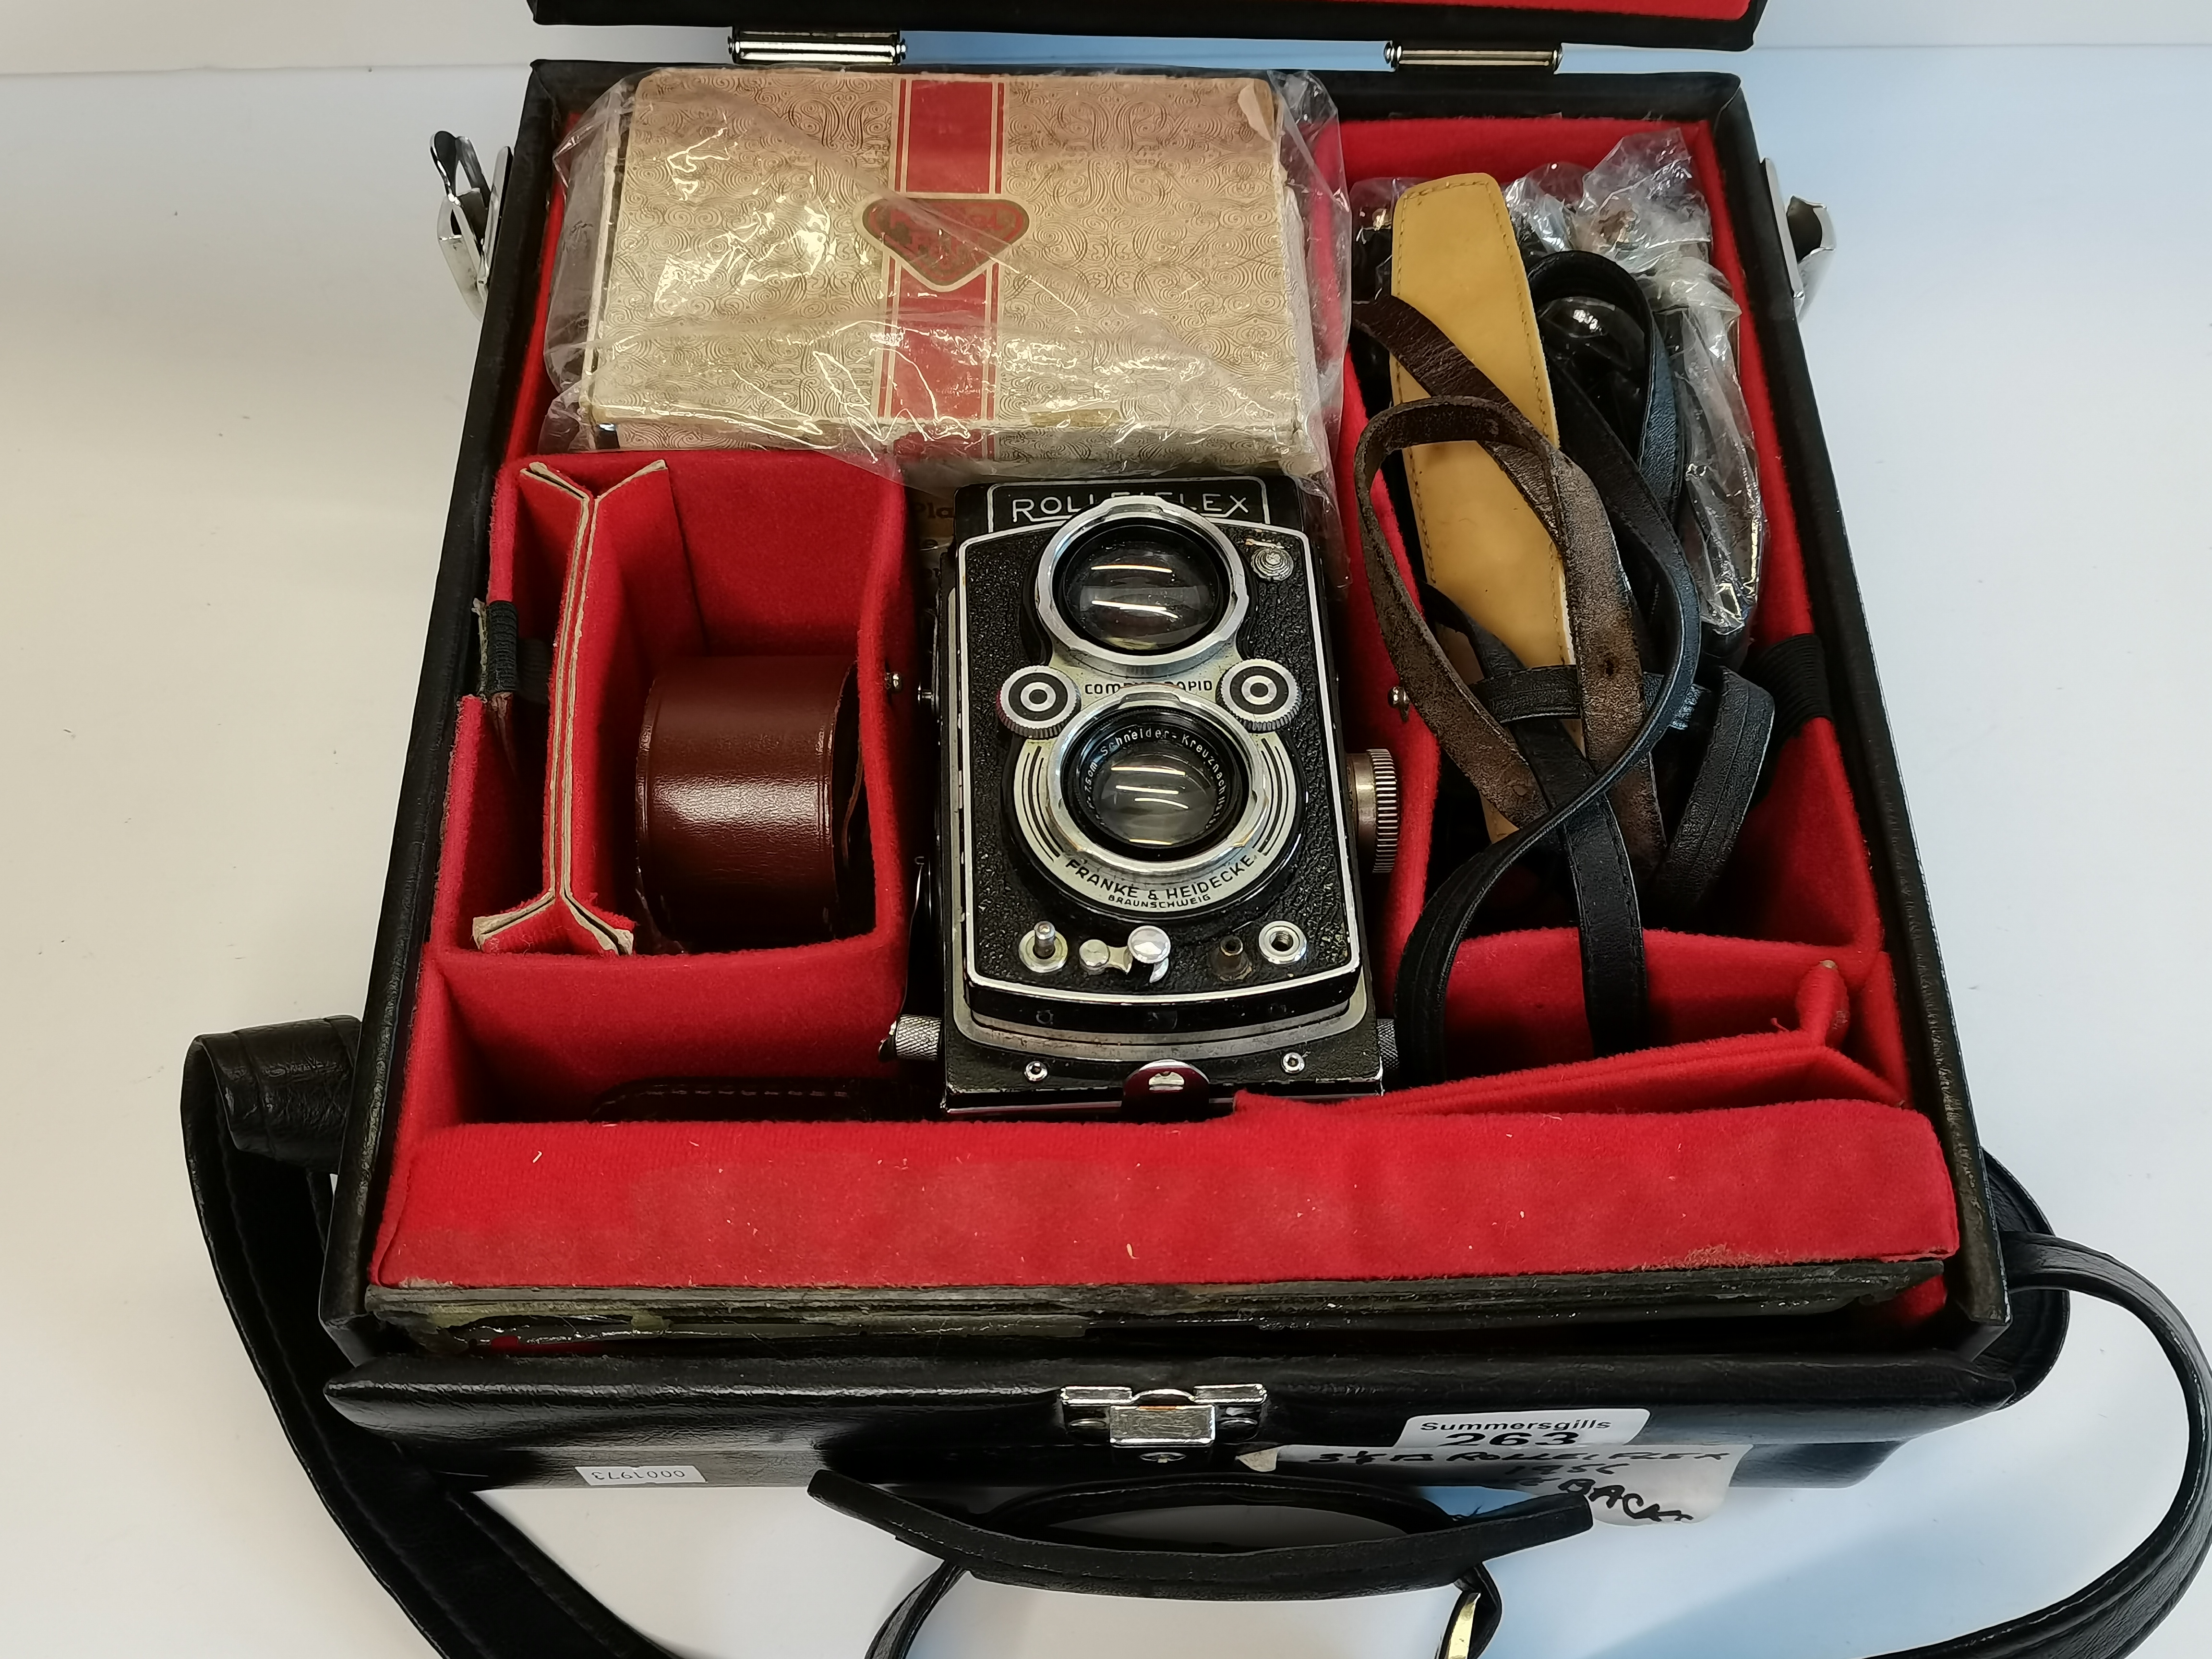 Rolleiflex vintage camera in case - Image 3 of 3